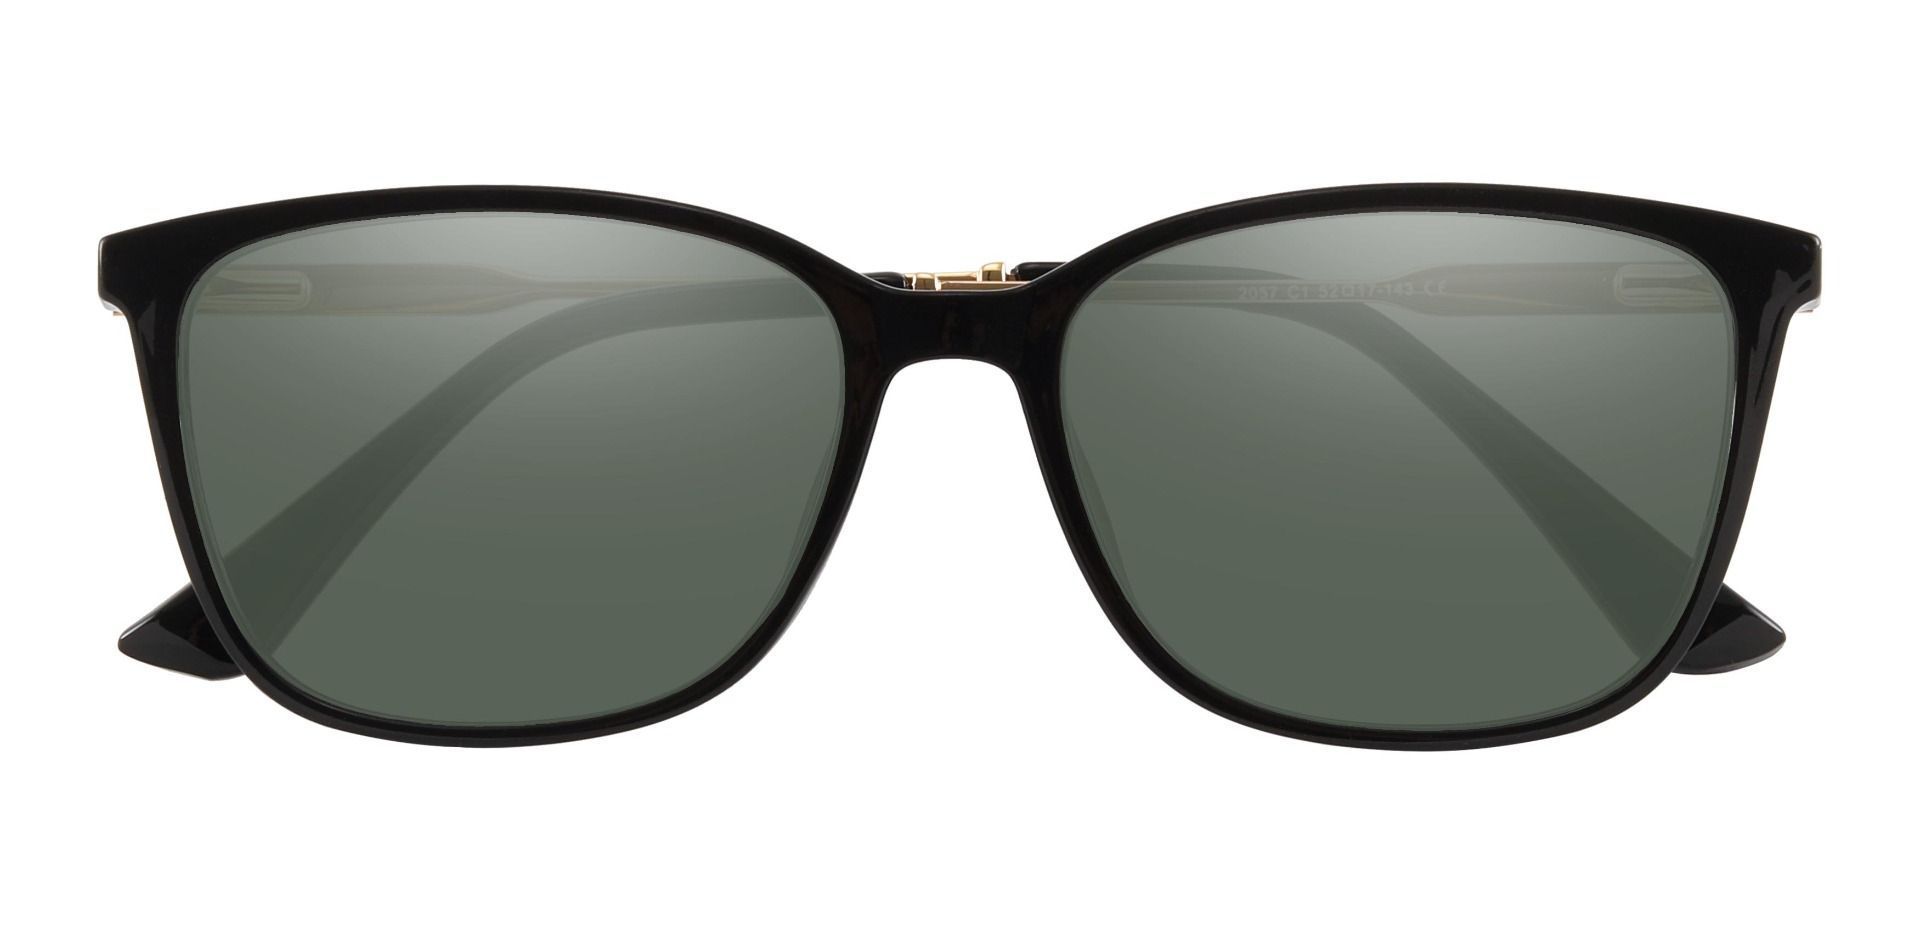 Miami Rectangle Progressive Sunglasses - Black Frame With Green Lenses